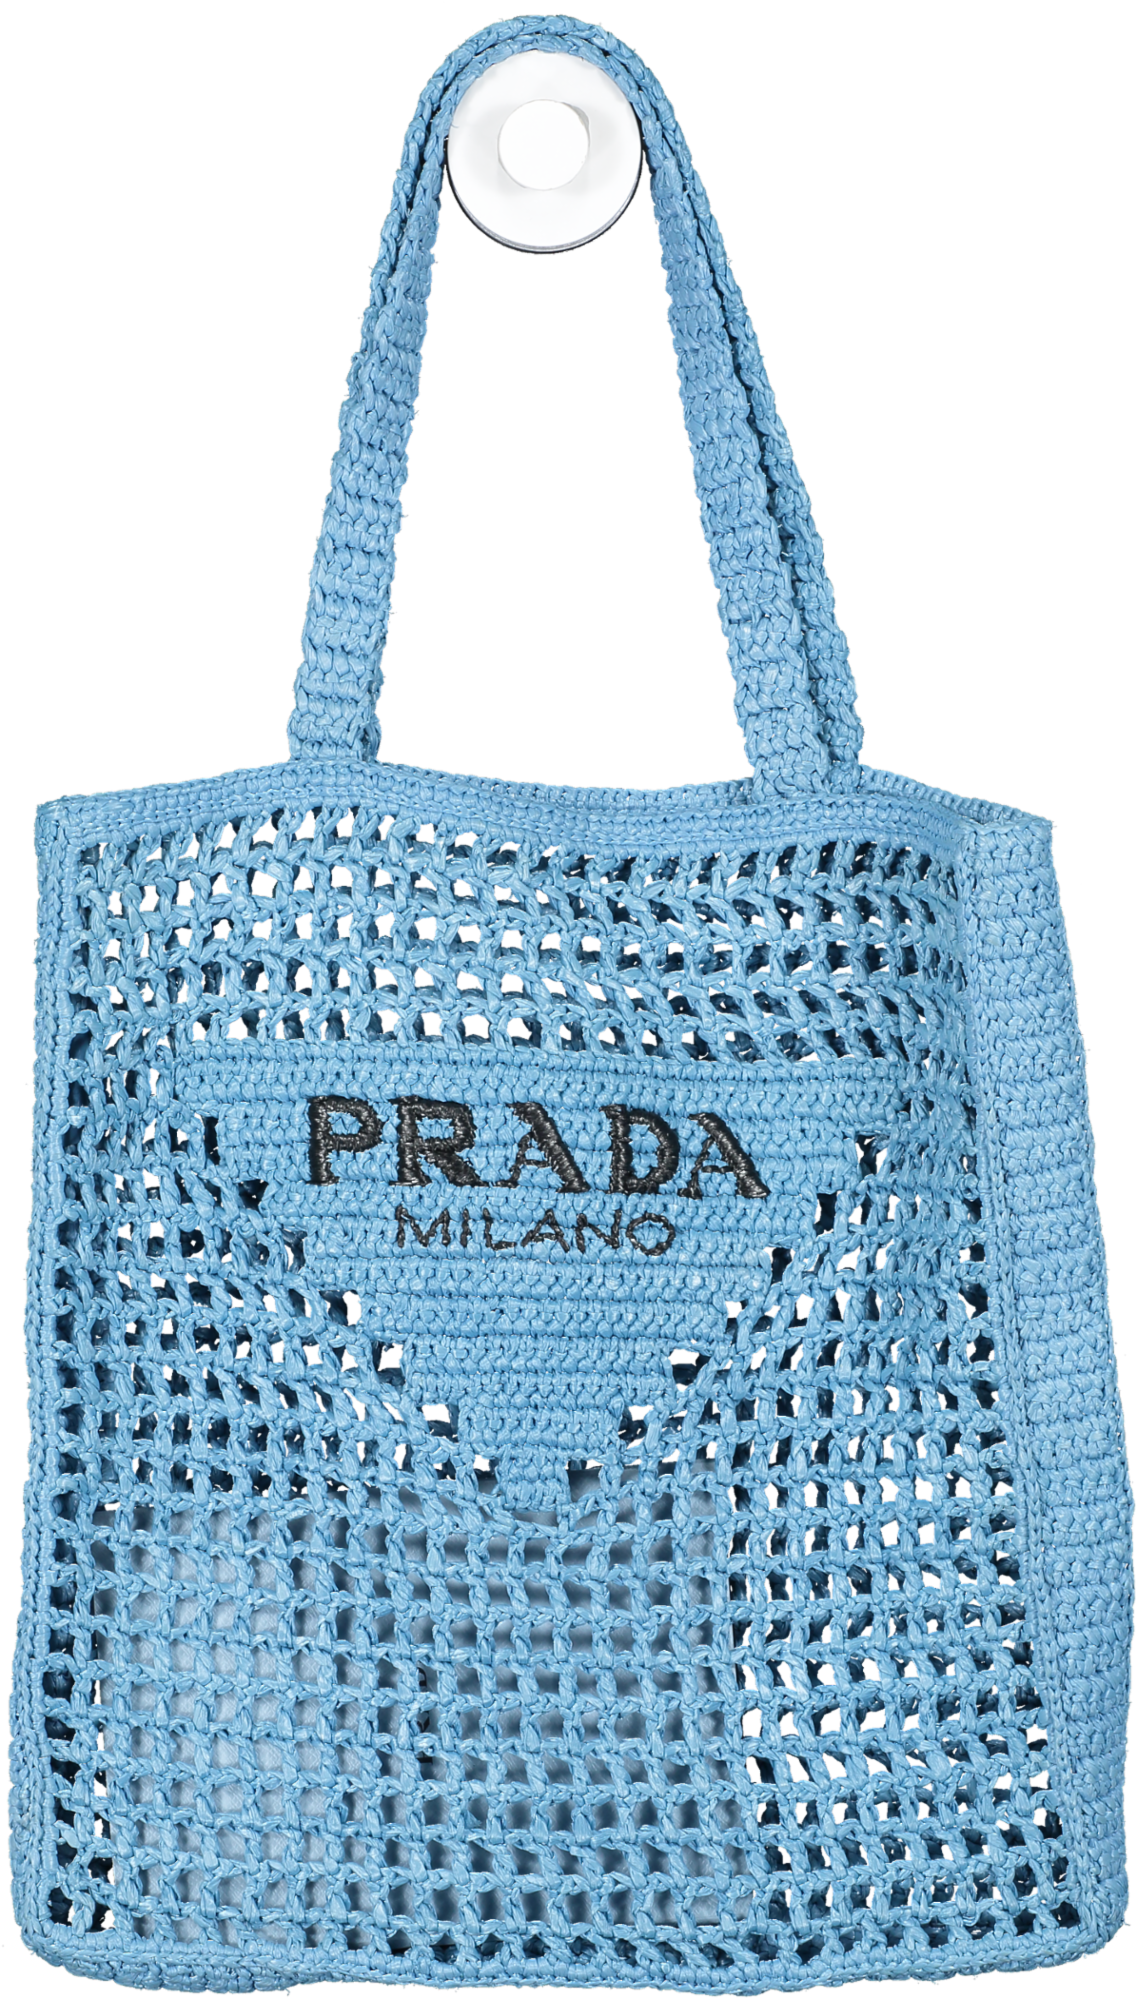 Prada Blue Crochet Tote Bag